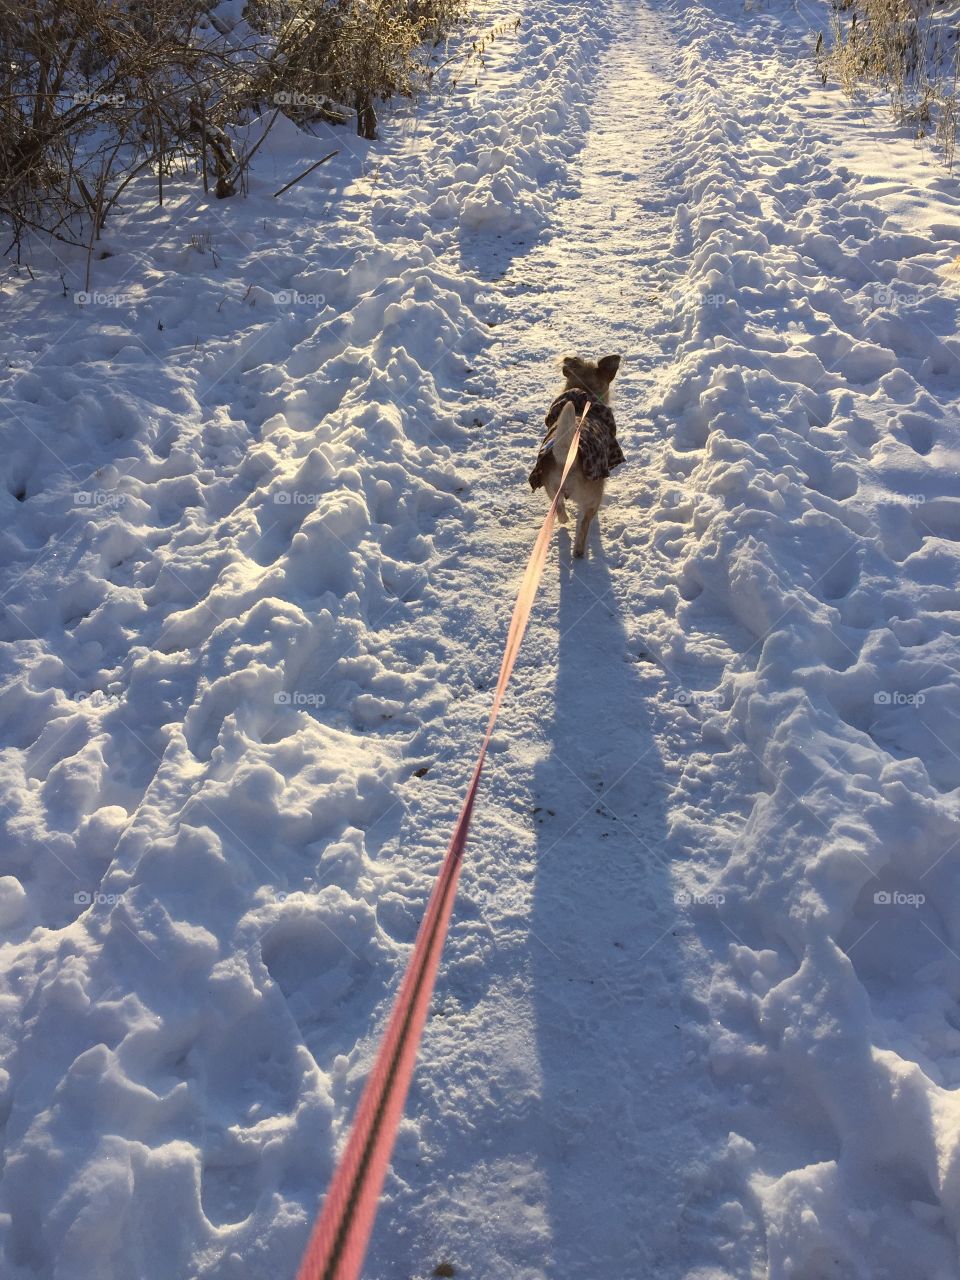 Taking a snowy walk